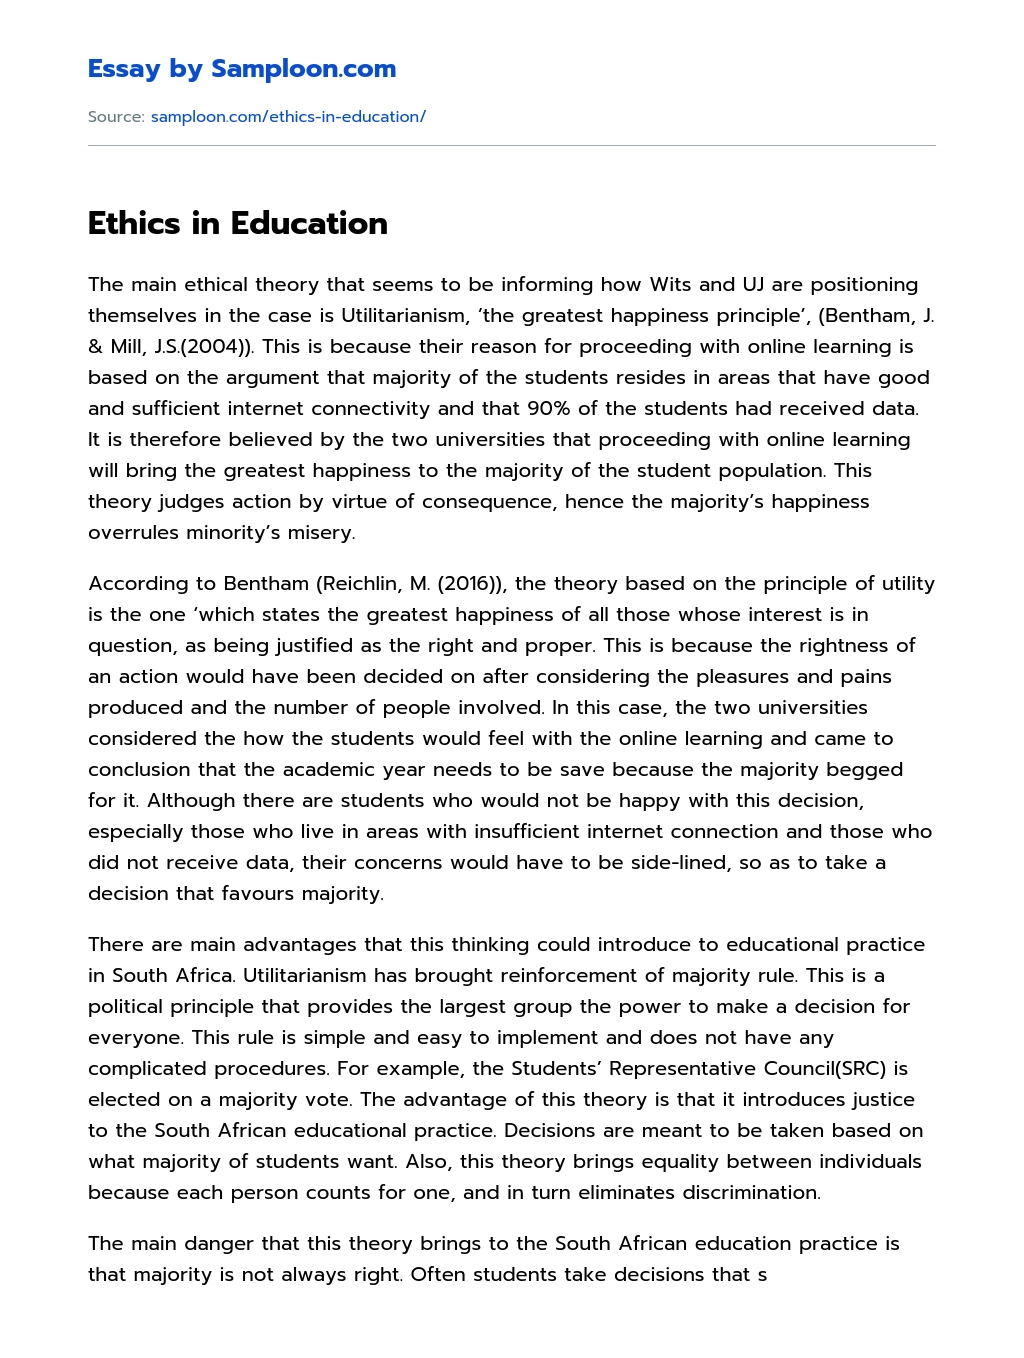 Ethics in Education essay